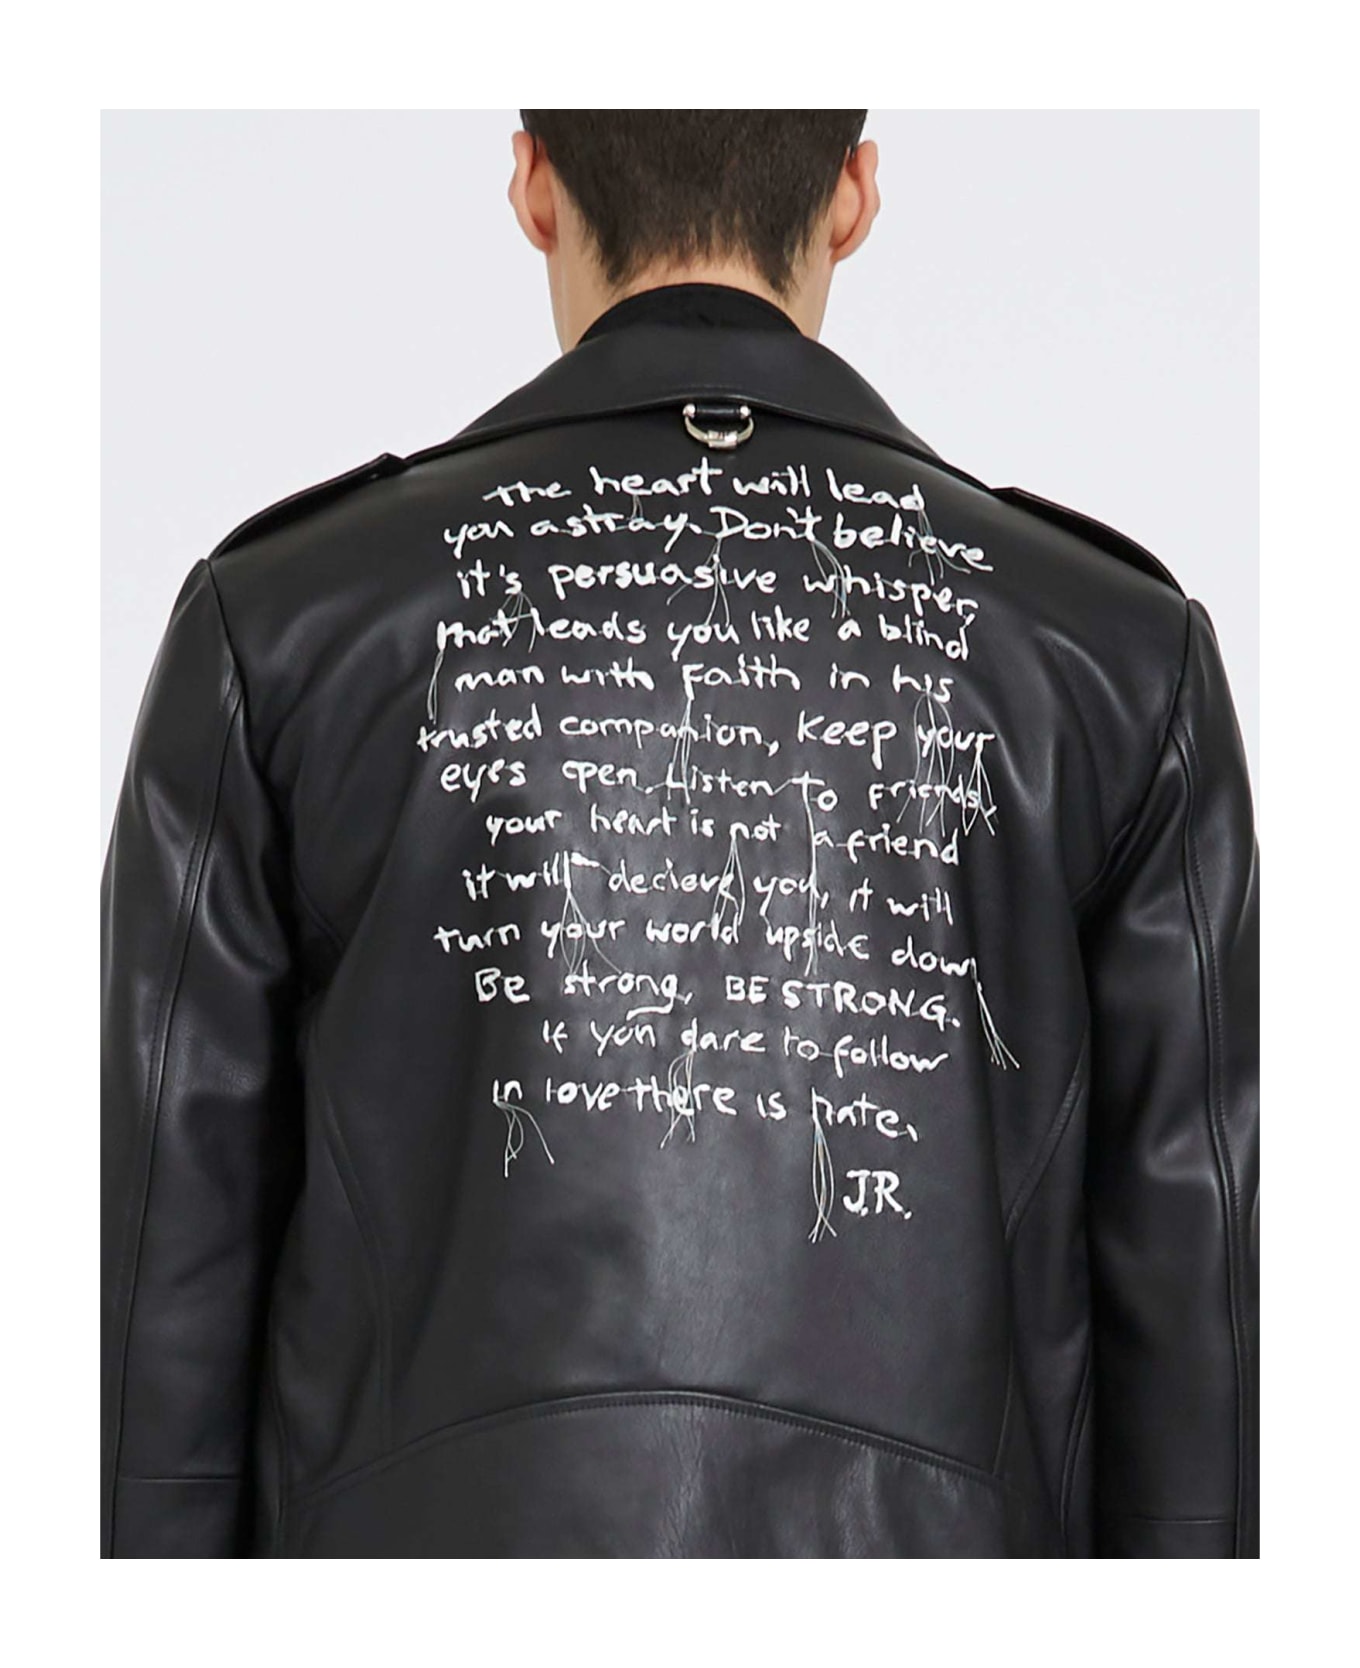 John Richmond Leather Jacket With Print On The Back - Nero レザージャケット